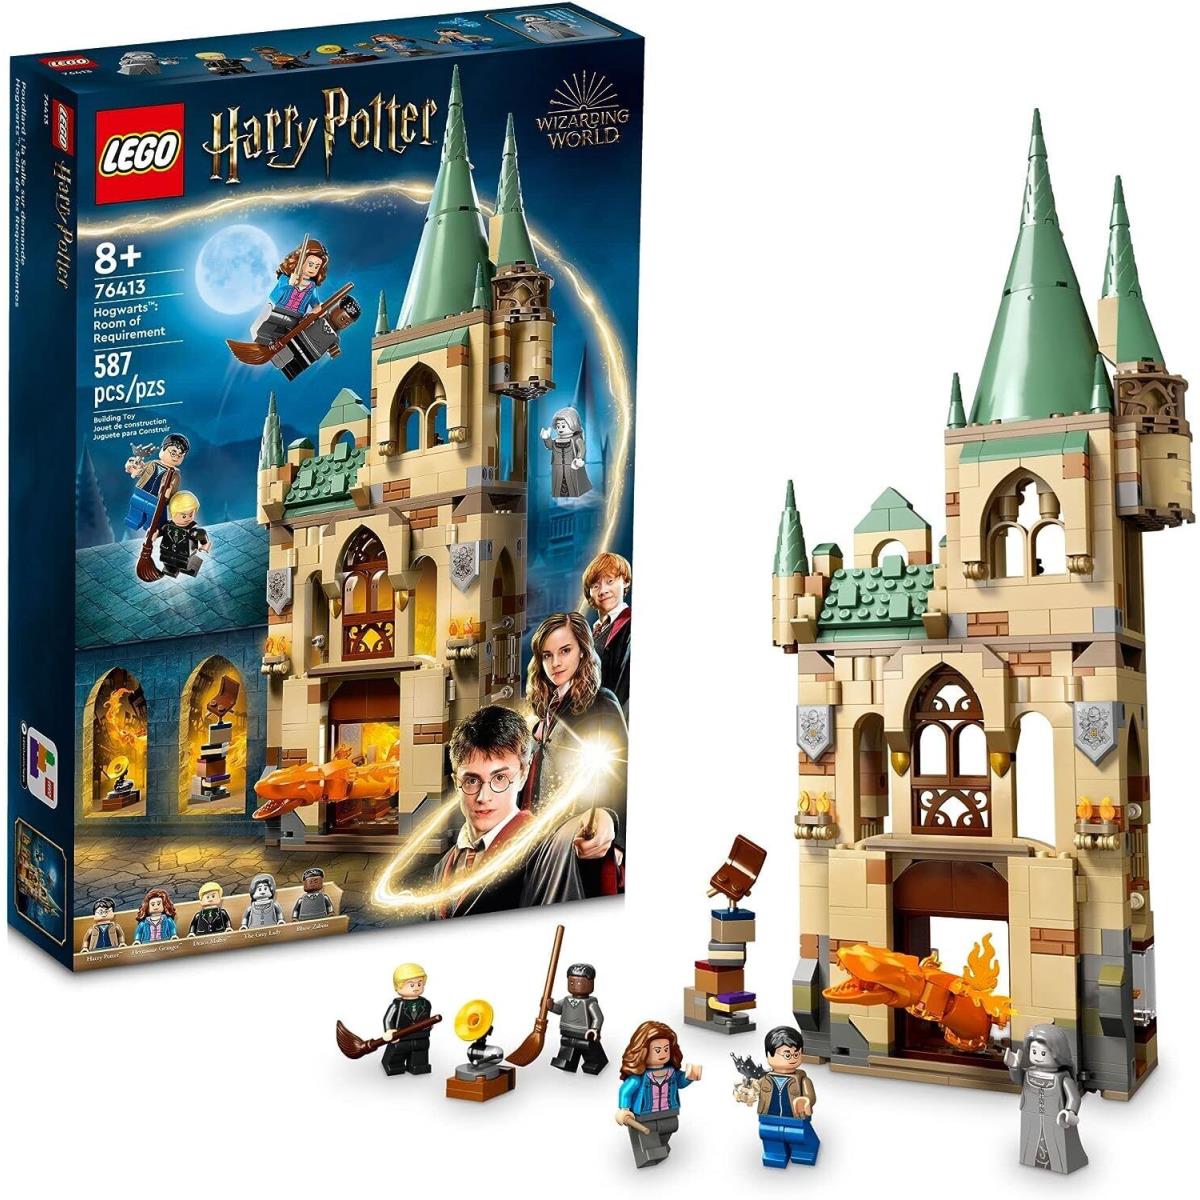 Harry Potter Hogwarts Room of Requirement Building Set 76413 Castle Building Toy